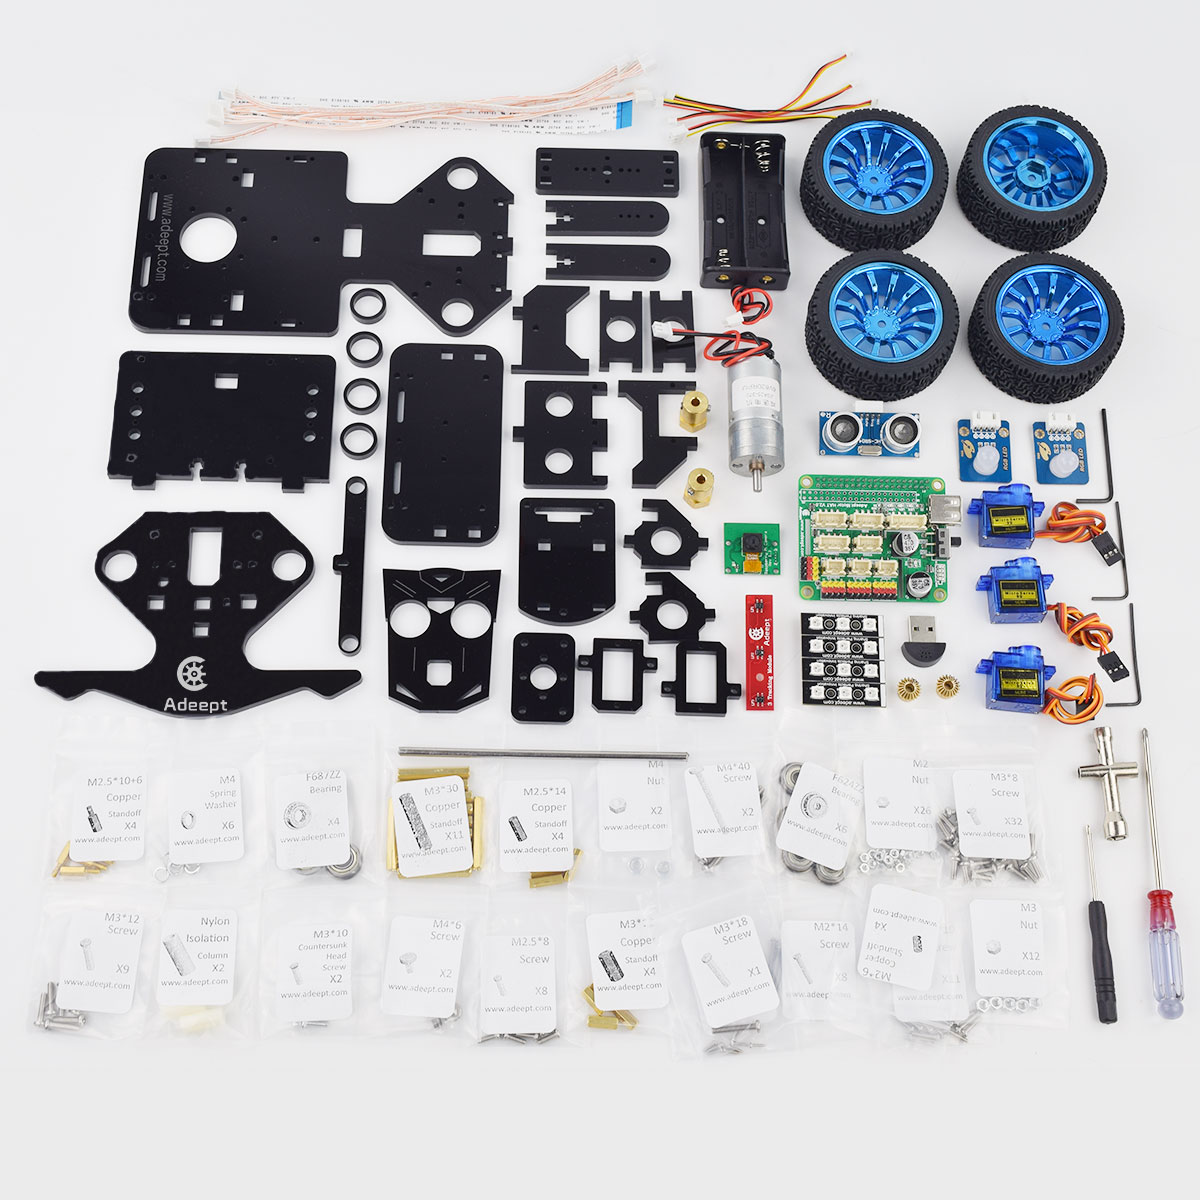 Adeept Mars Rover PiCar-B WiFi Smart Robot Car Kit for Raspberry 